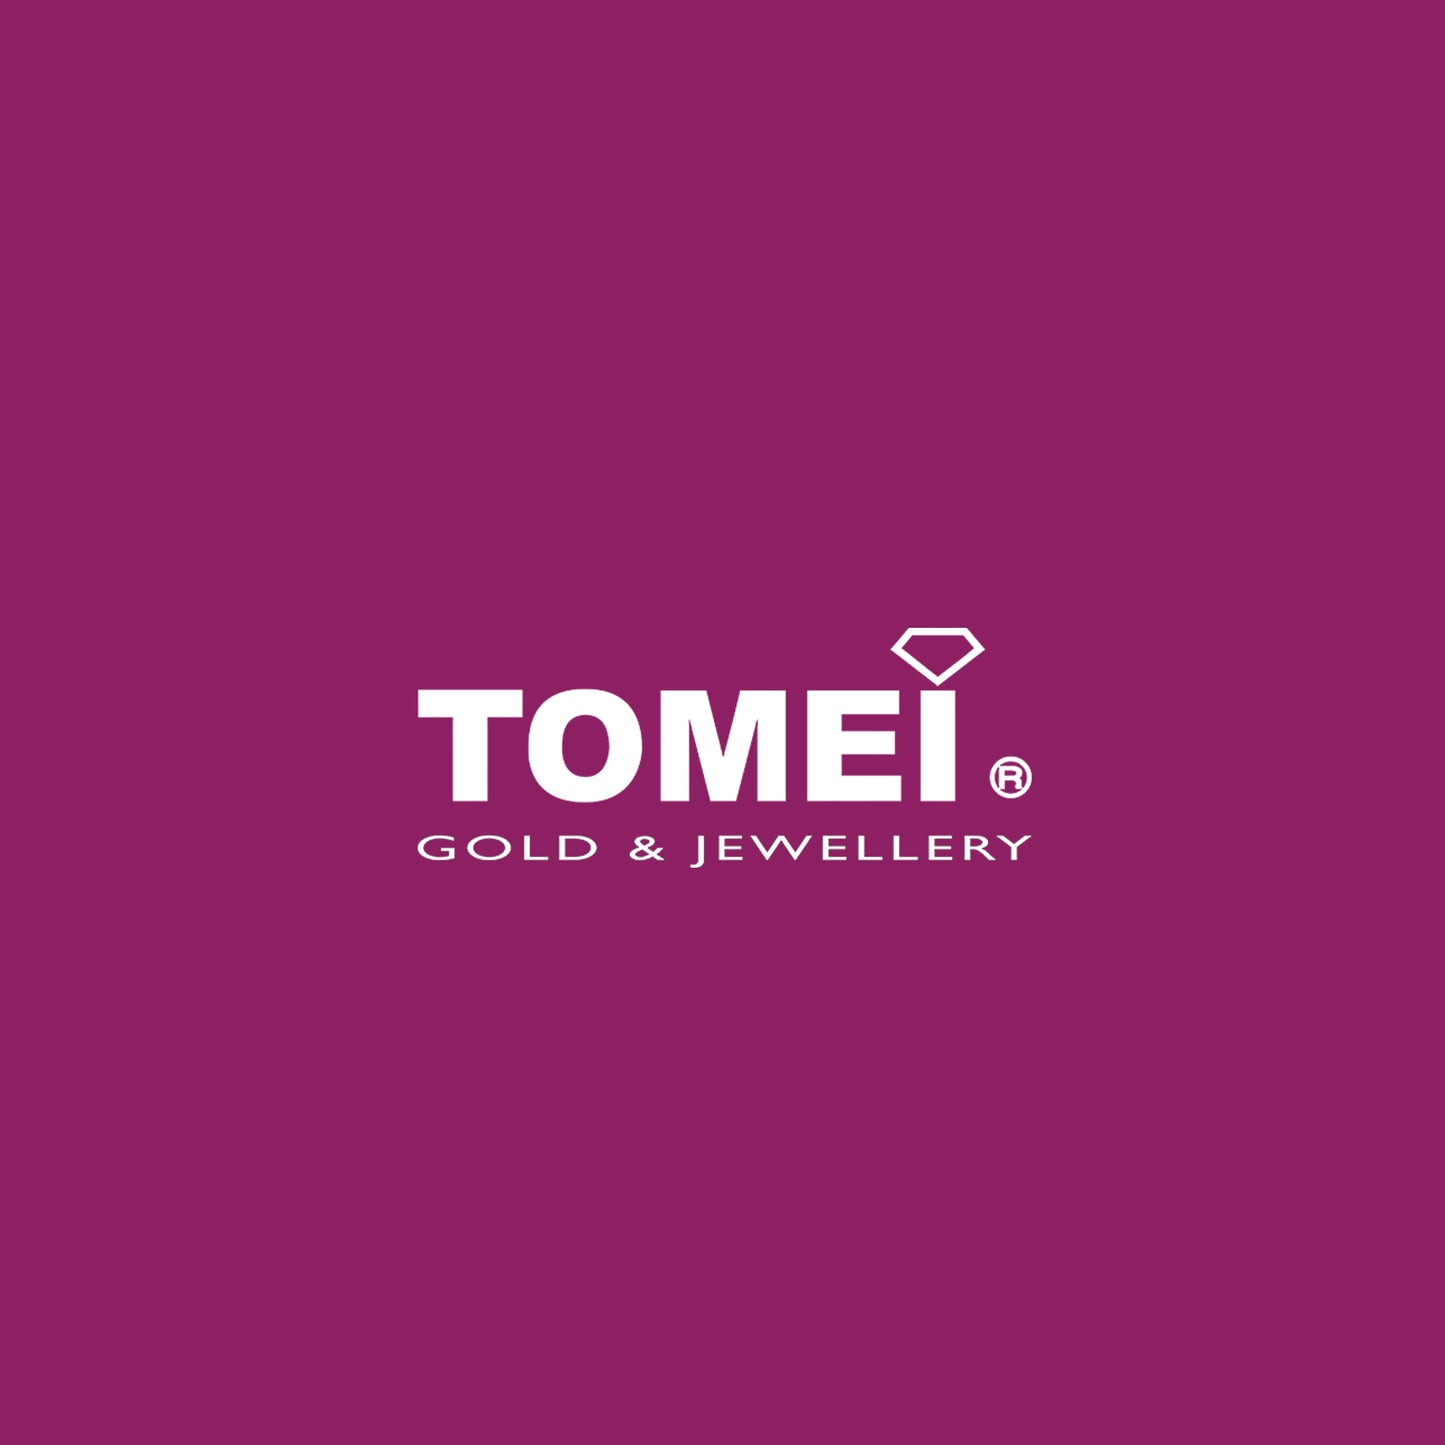 TOMEI Revelry in Ravishing Sparks Ring, Diamond White Gold 375 (R4036V)